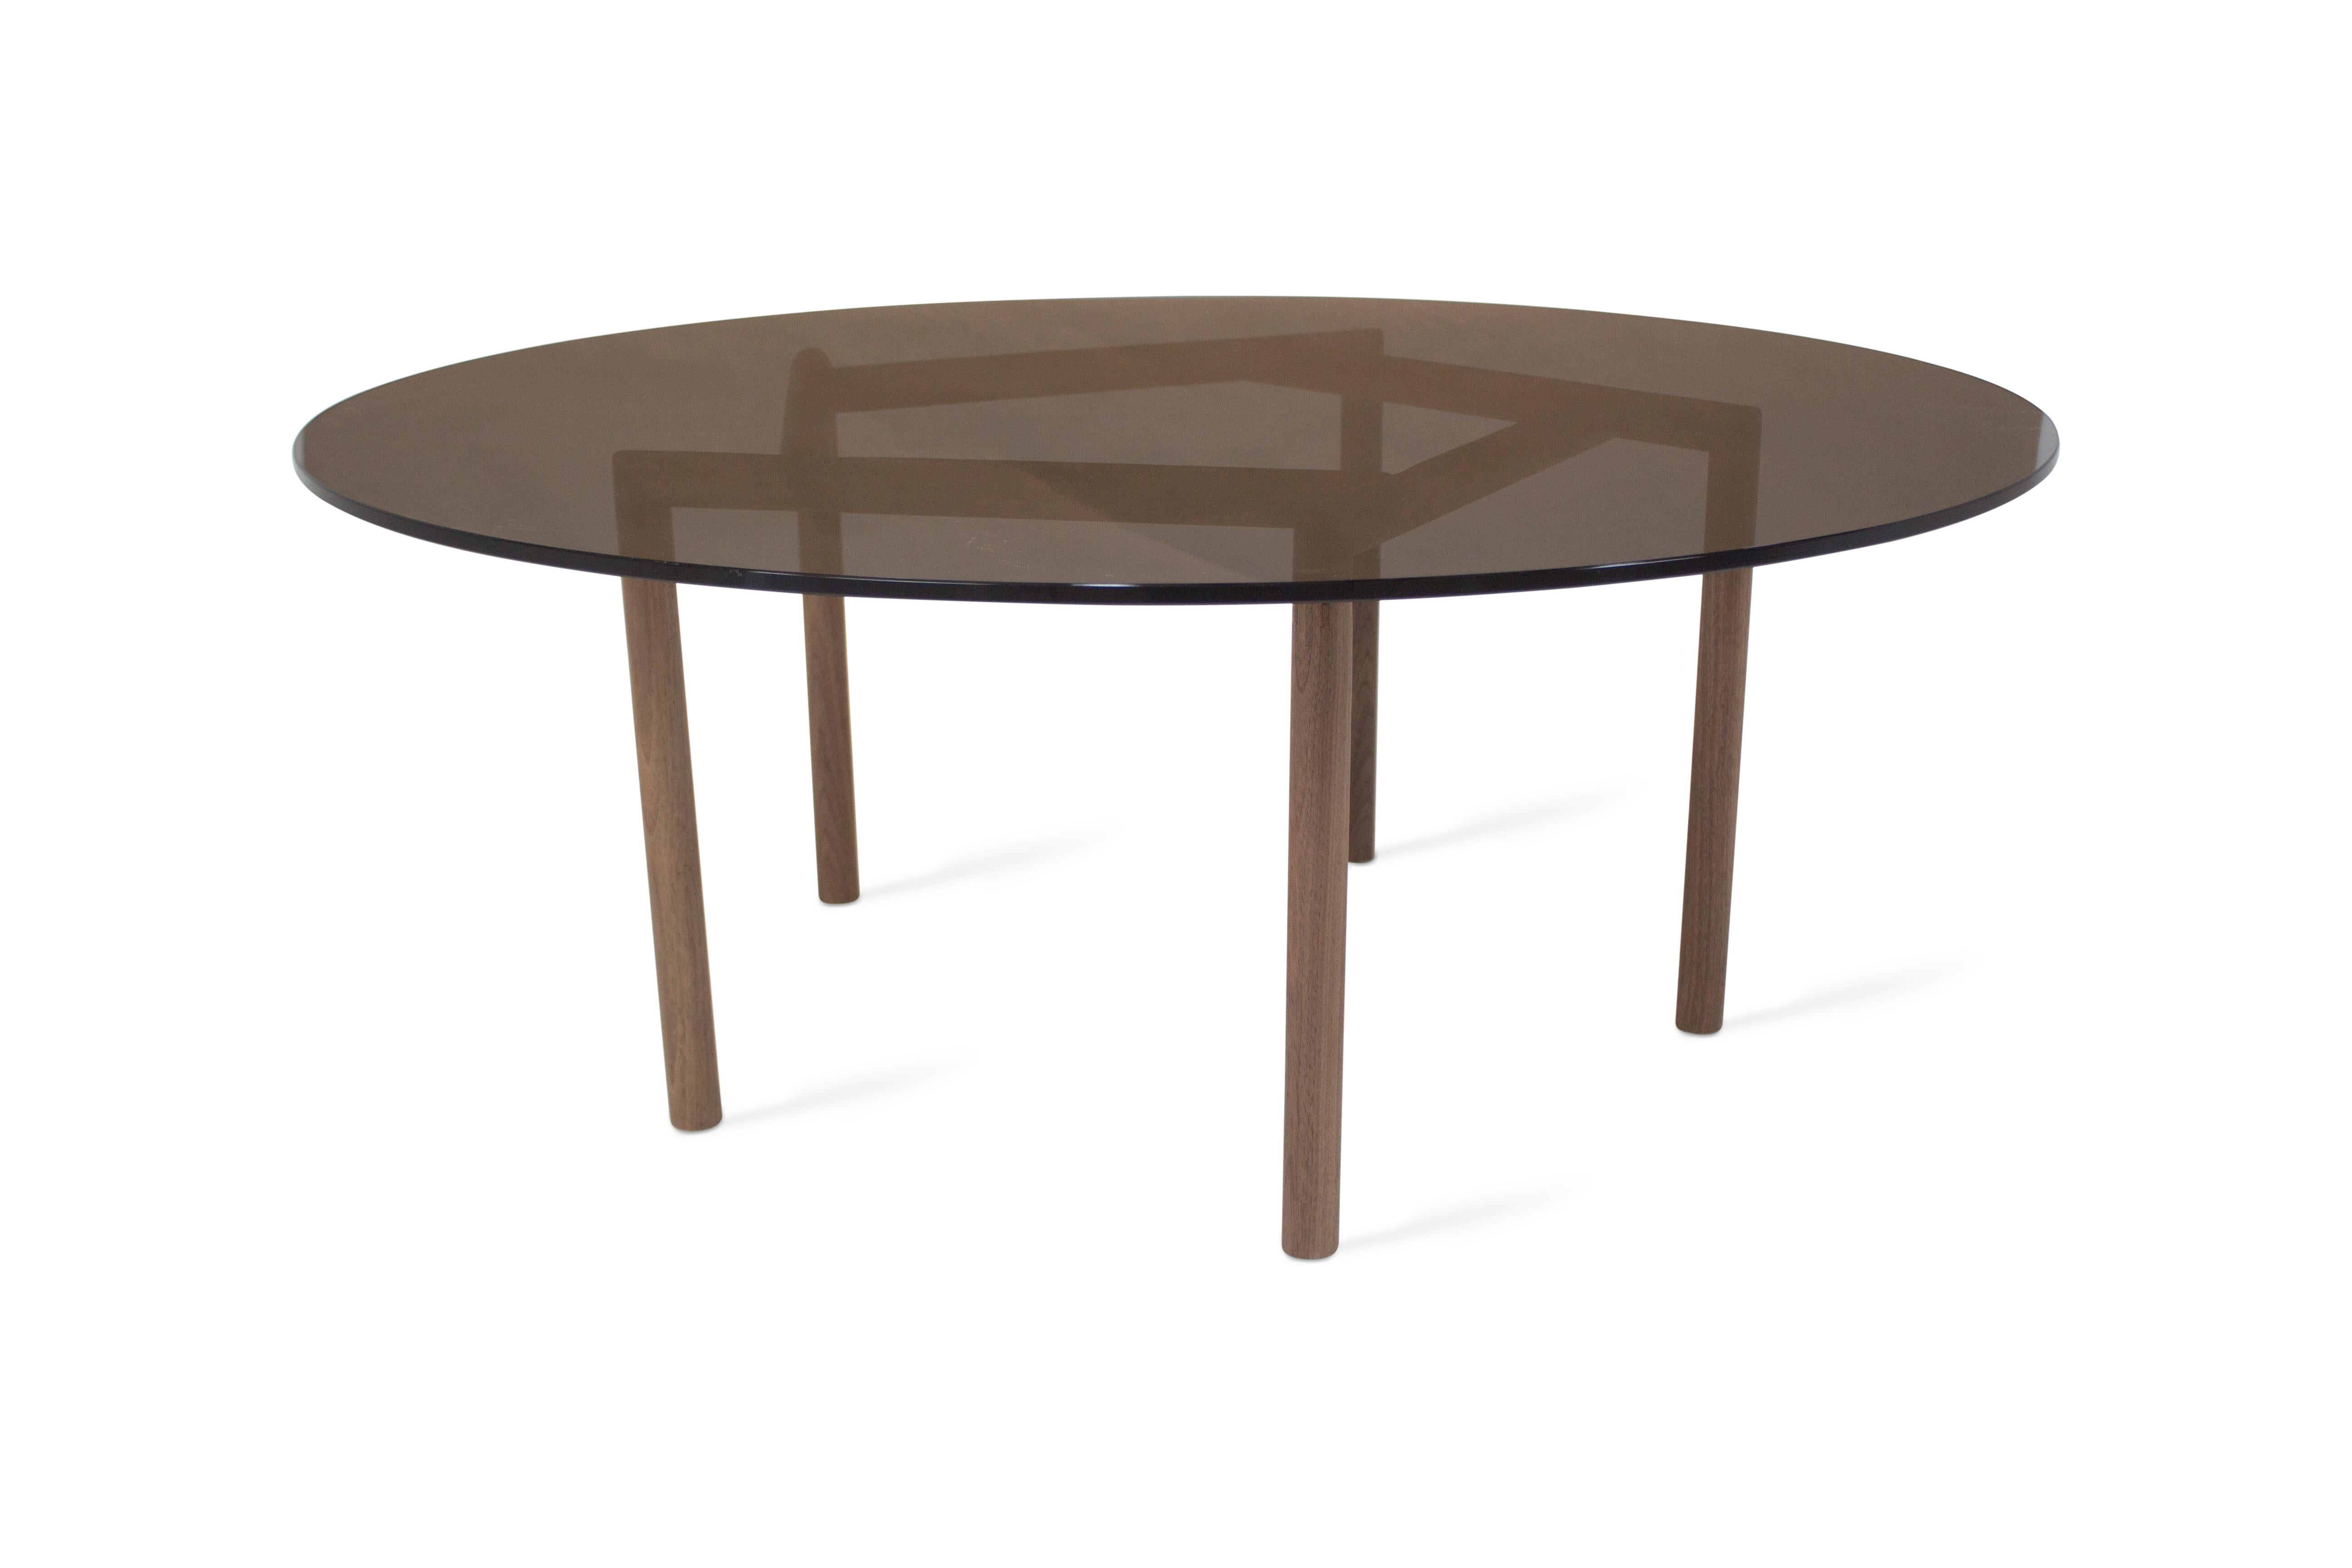 Scandinavian inspired coffee table. Simple, minimal and sleek coffee table.
 